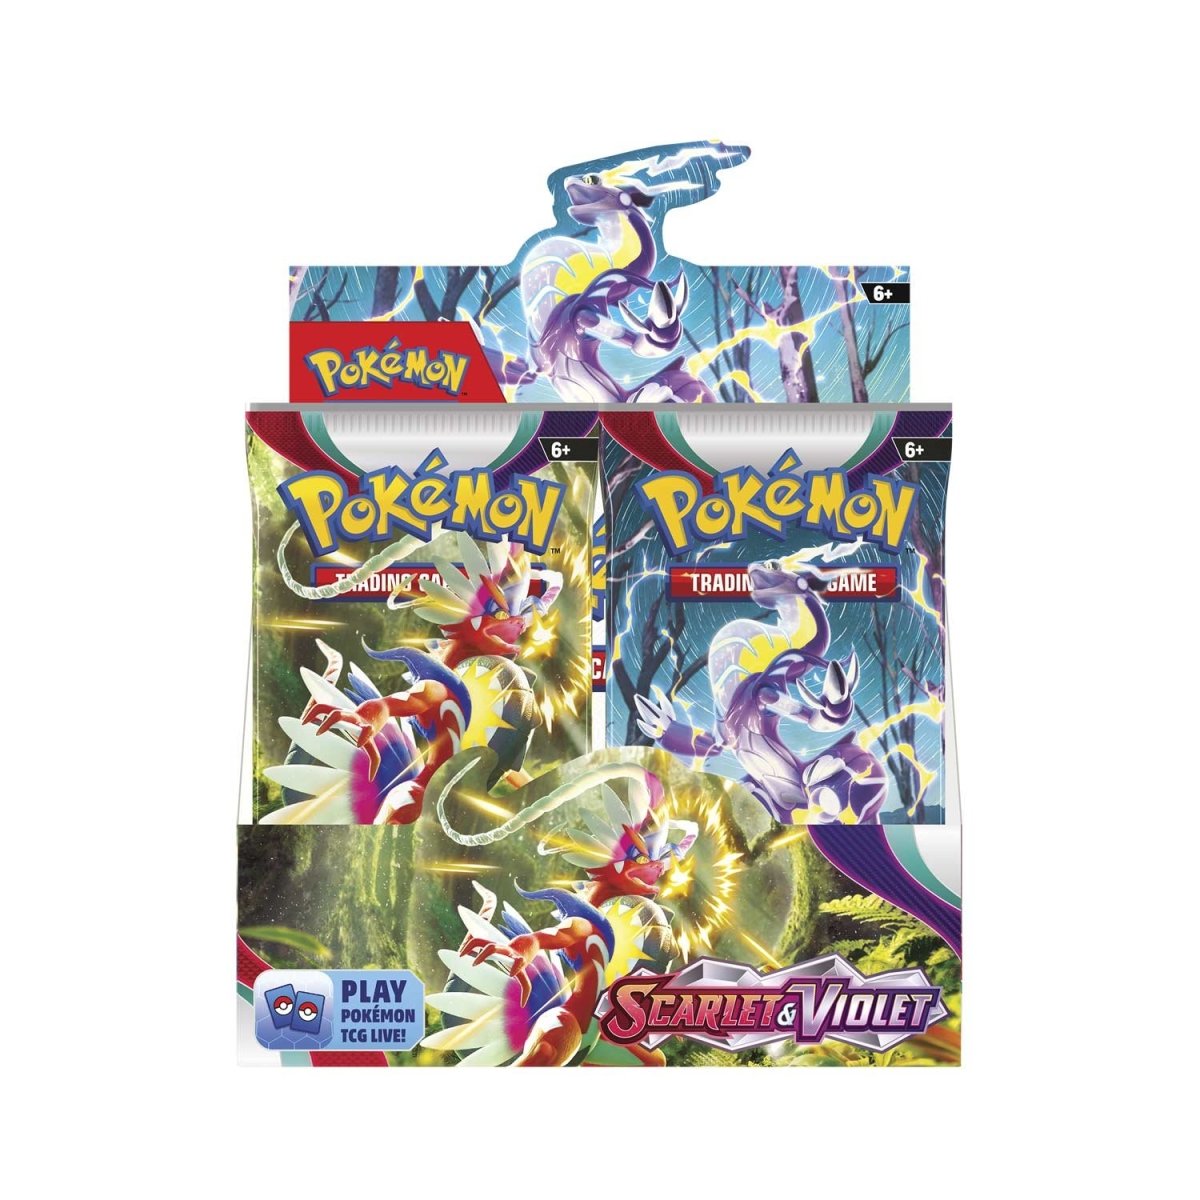 Pokemon Box - Pokemon Card Packs and Boxes